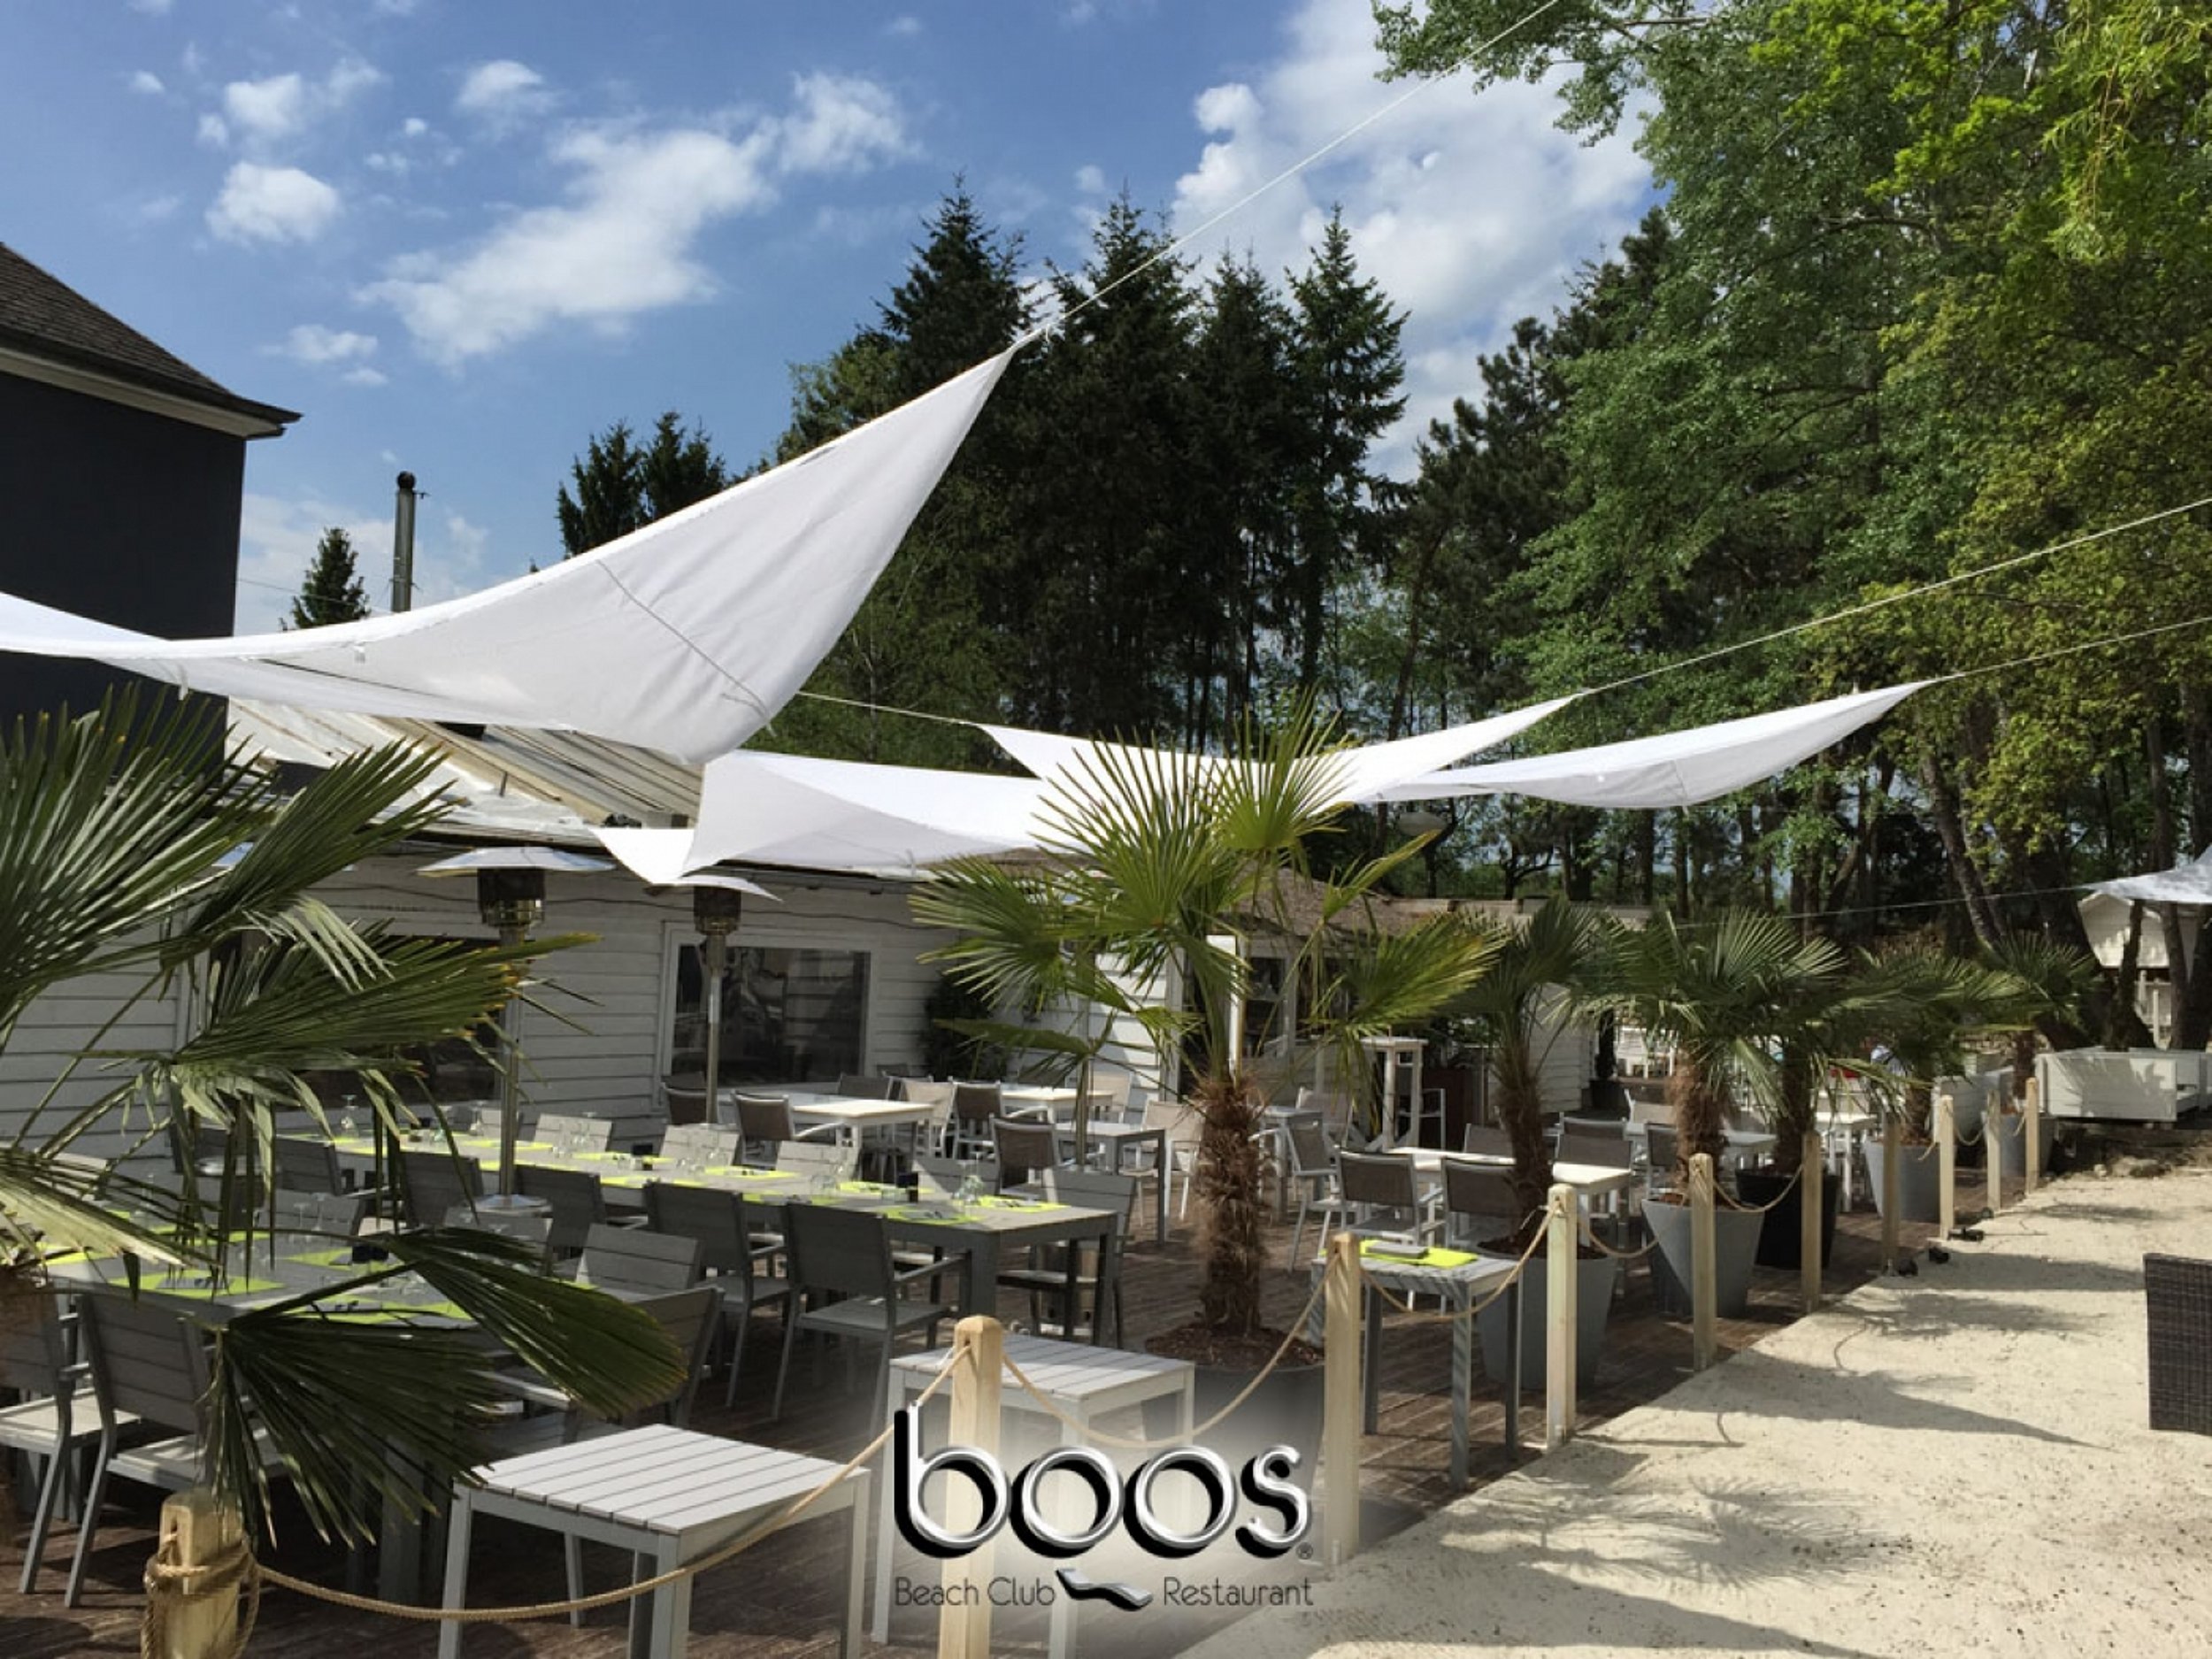 Boos Beach Club & Restaurant Bridel